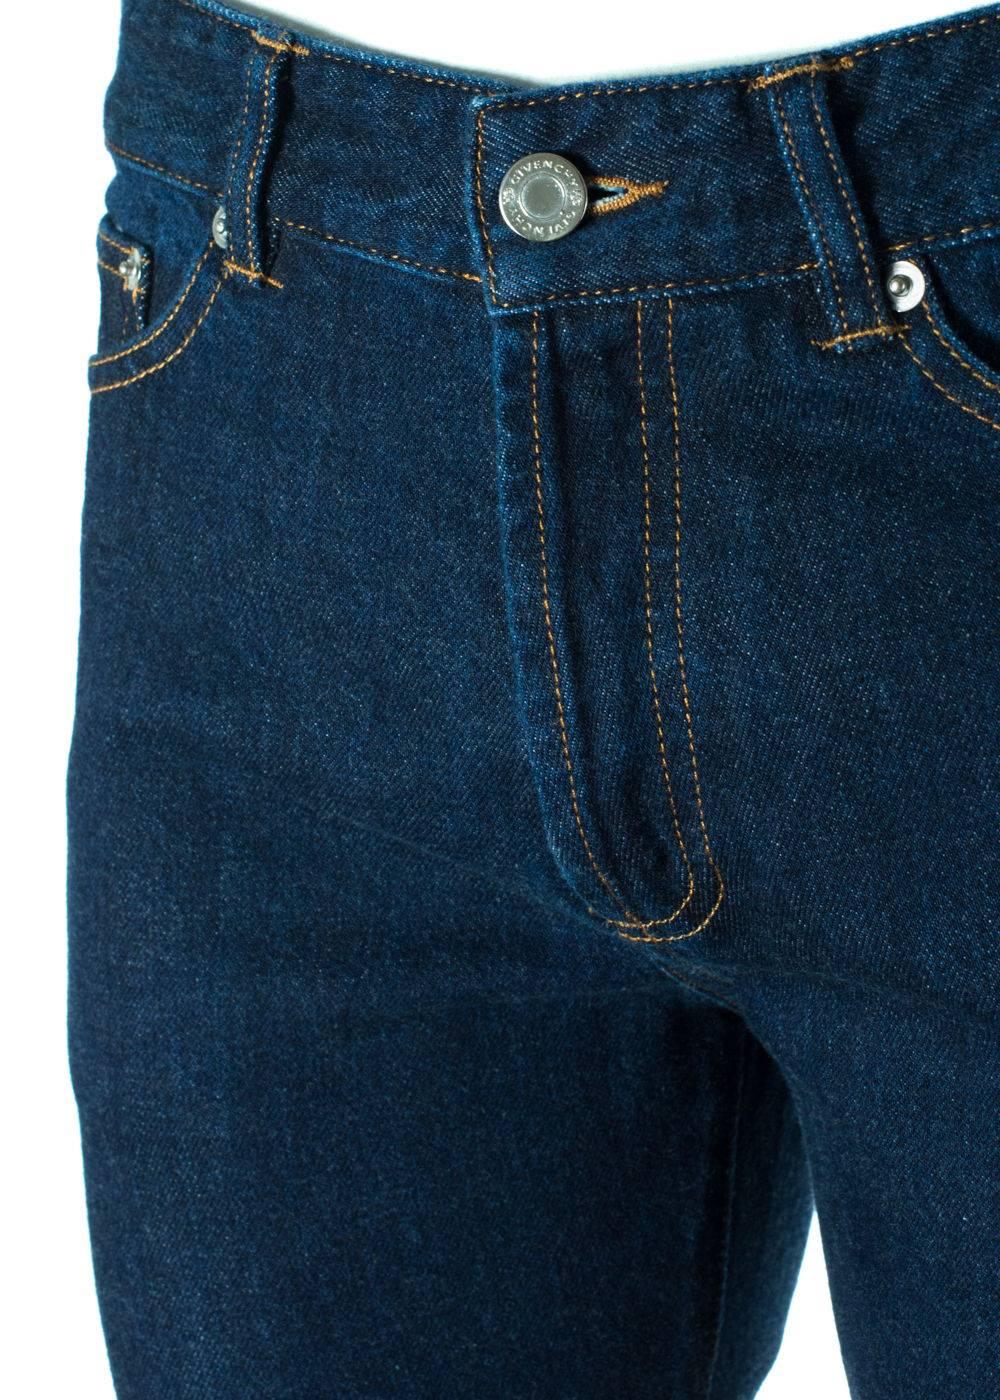 Givenchy Men's Medium Blue W/ Star Accent Denim Jeans  For Sale 1